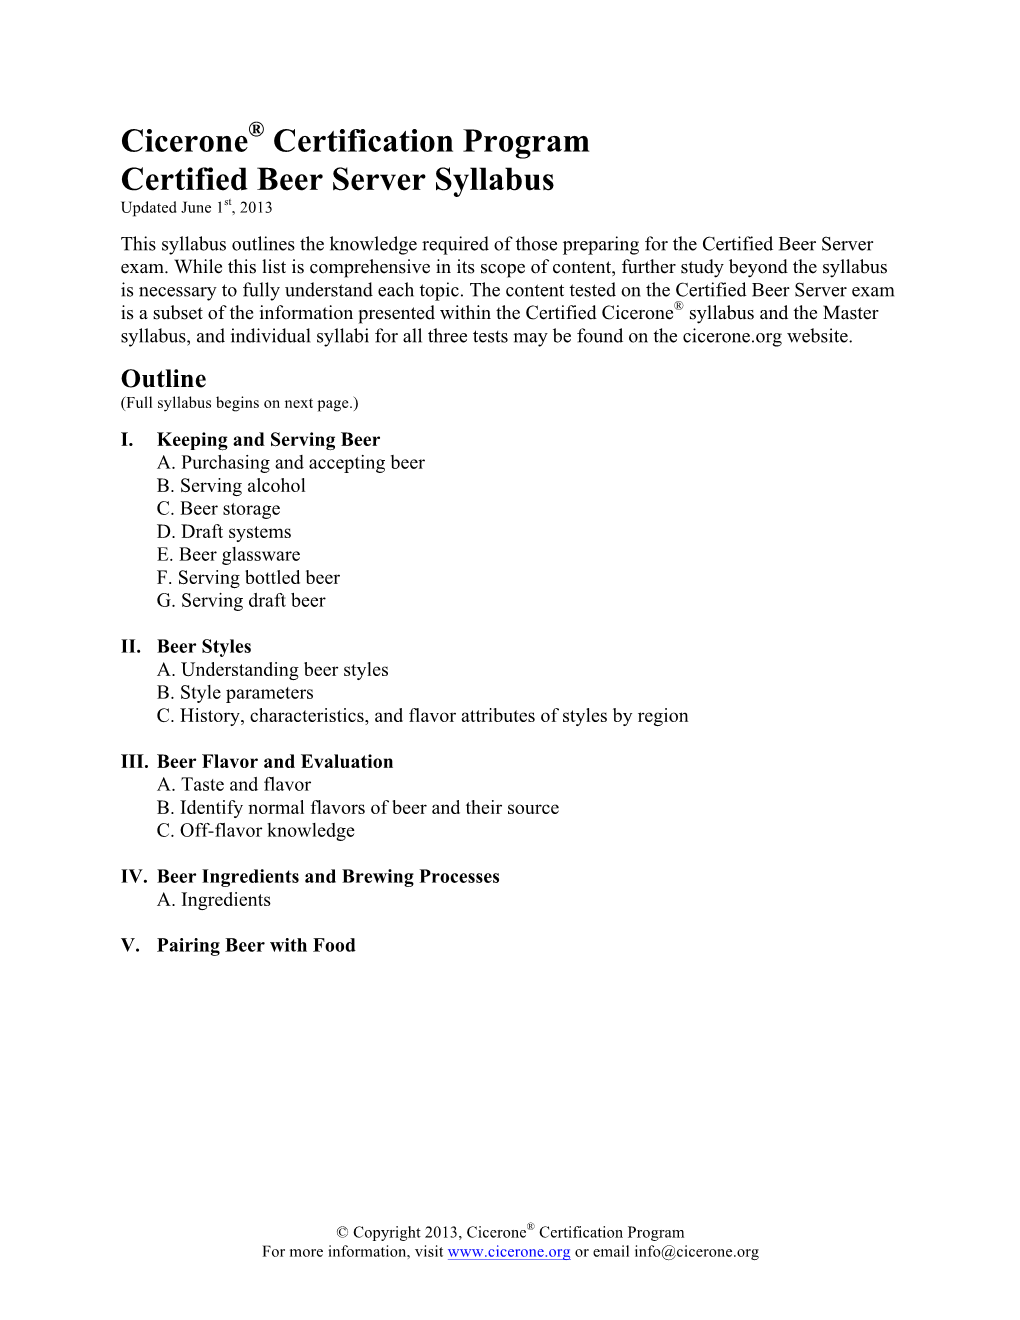 Cicerone Certification Program Certified Beer Server Syllabus